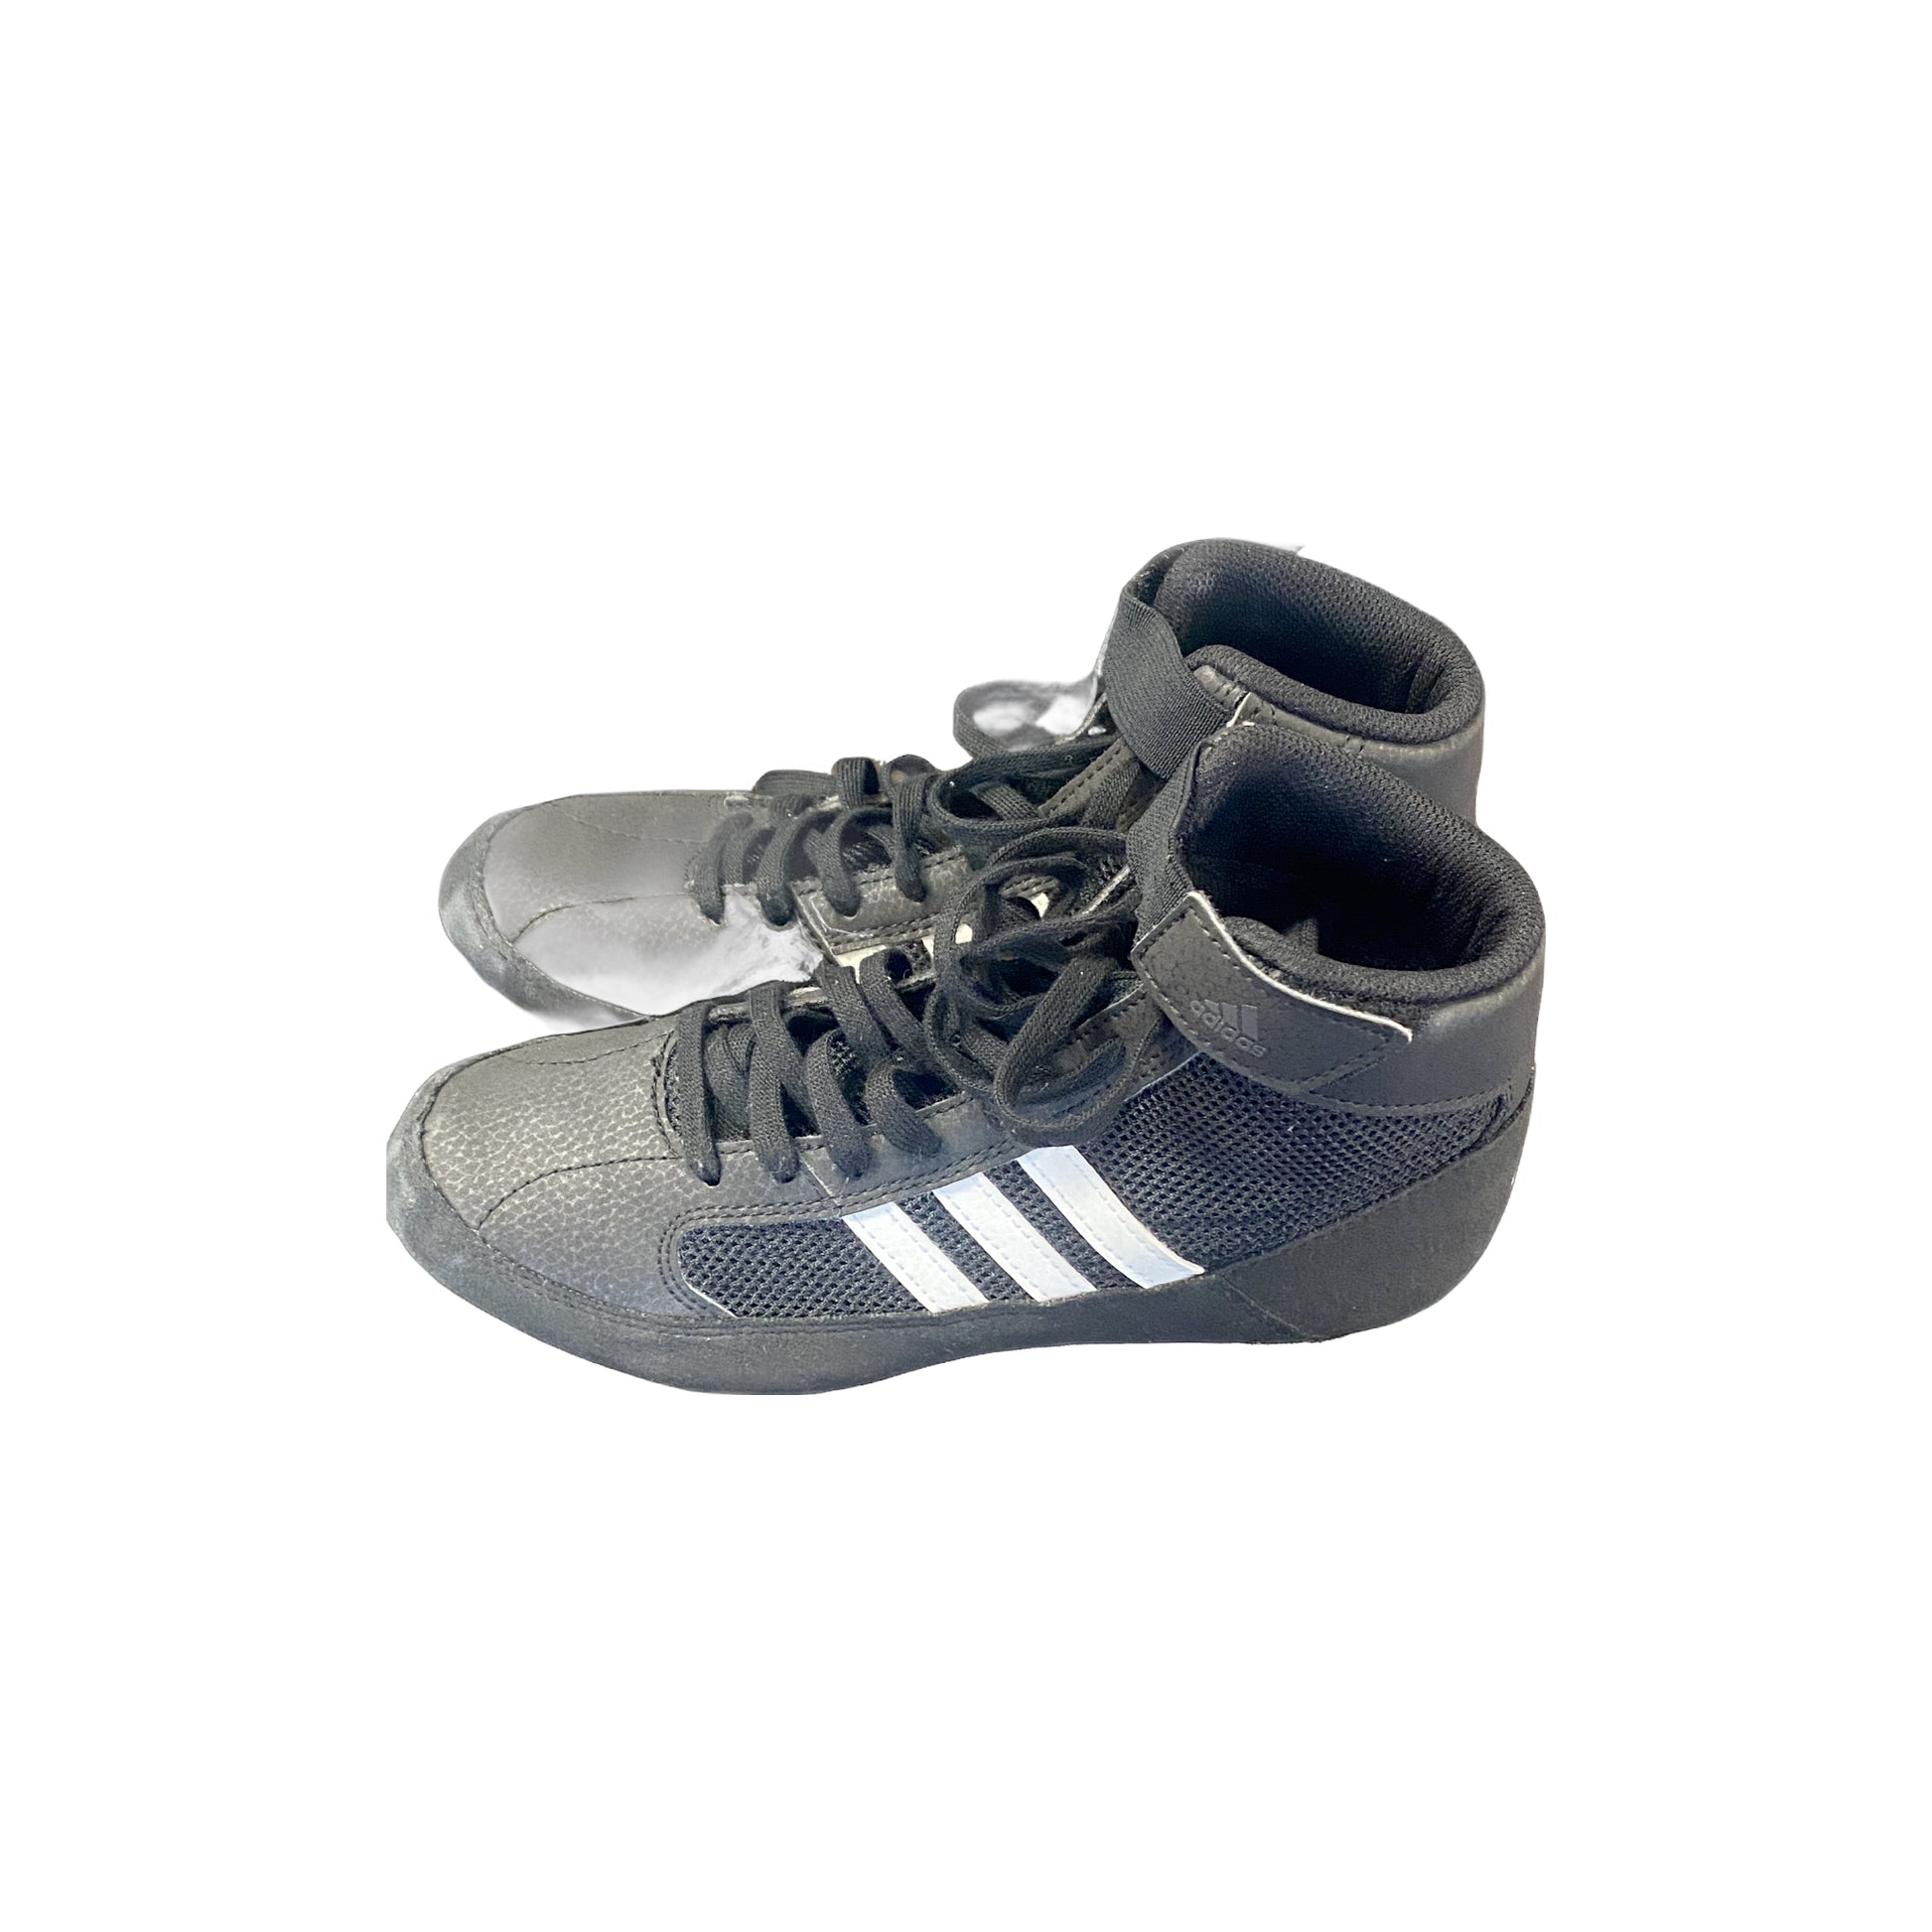 Adidas Wrestling Shoes - Size 4